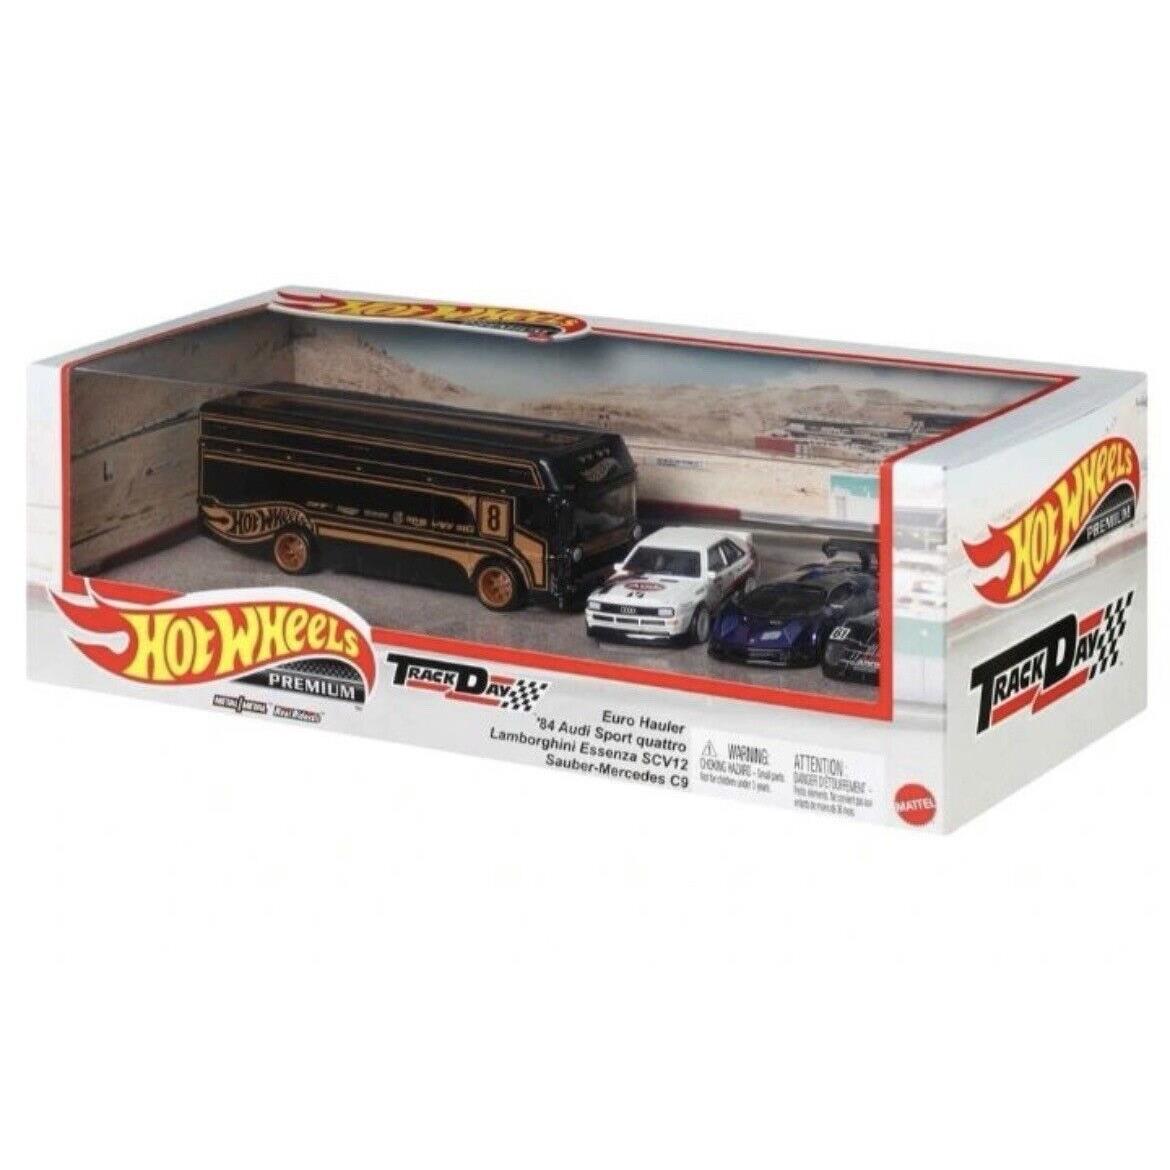 Hot Wheels Premium Track Day Diorama Collectors Box Set